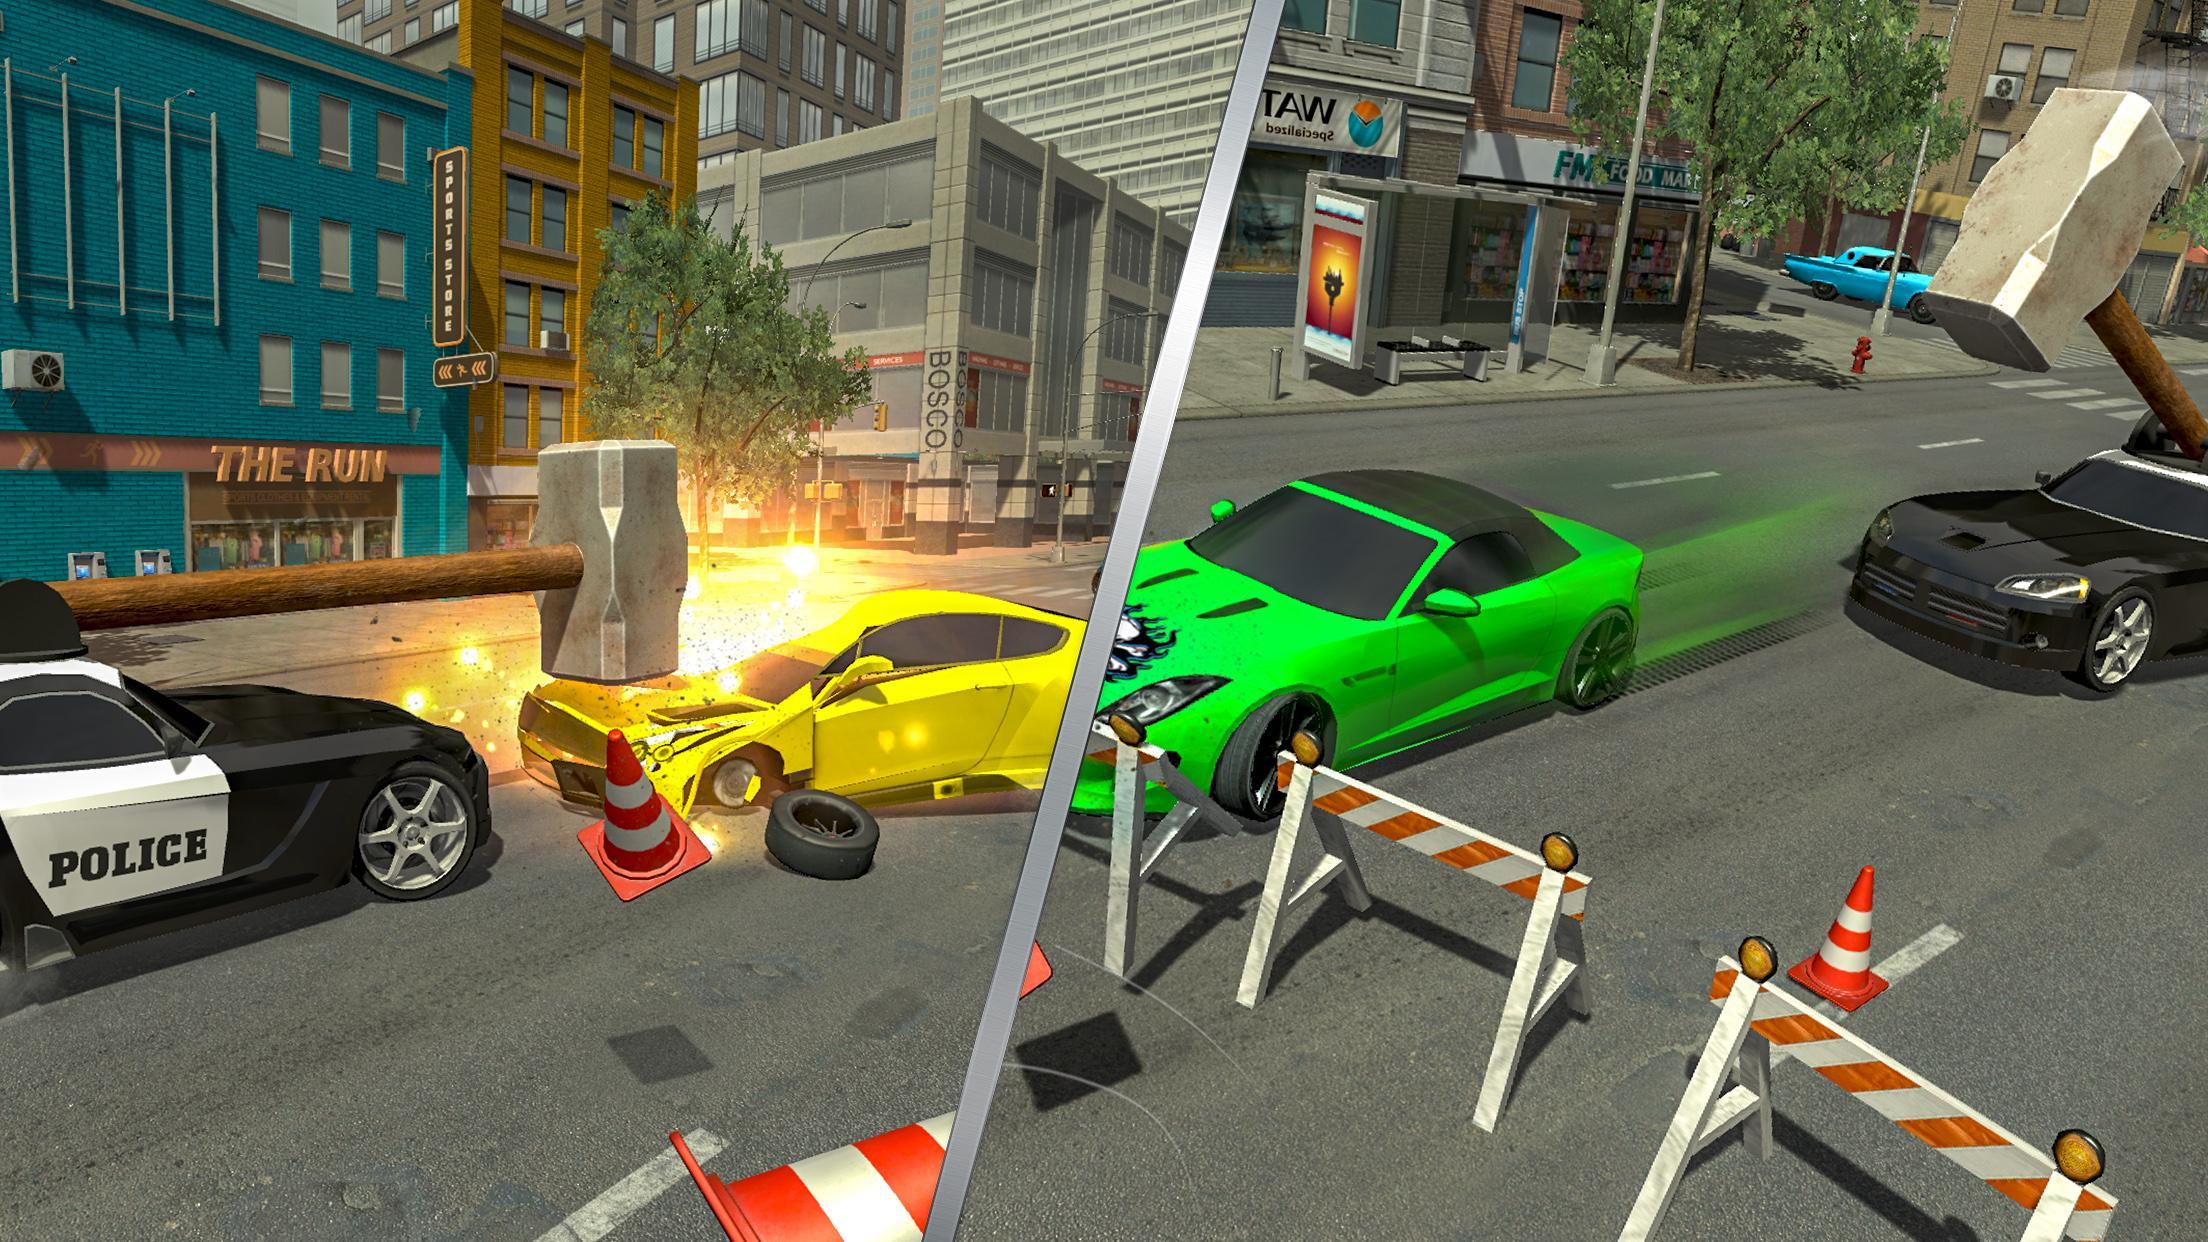 Us Police Chase Hammer Car Crash Simulator Game For Android Apk Download - roblox car crash simulator group